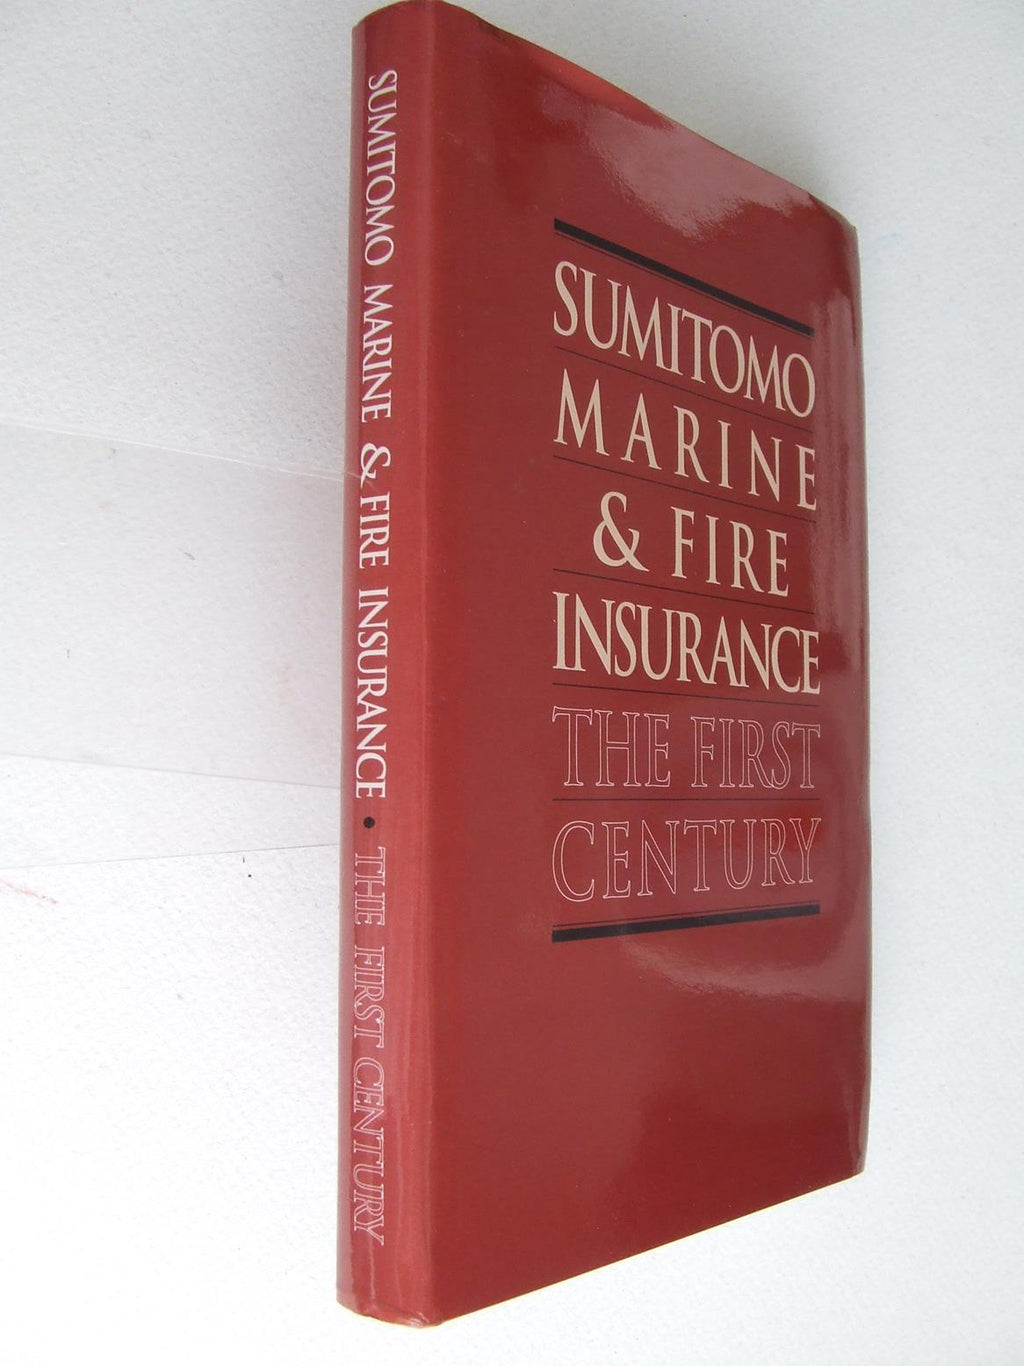 Sumitomo Marine & Fire Insurance, the first century